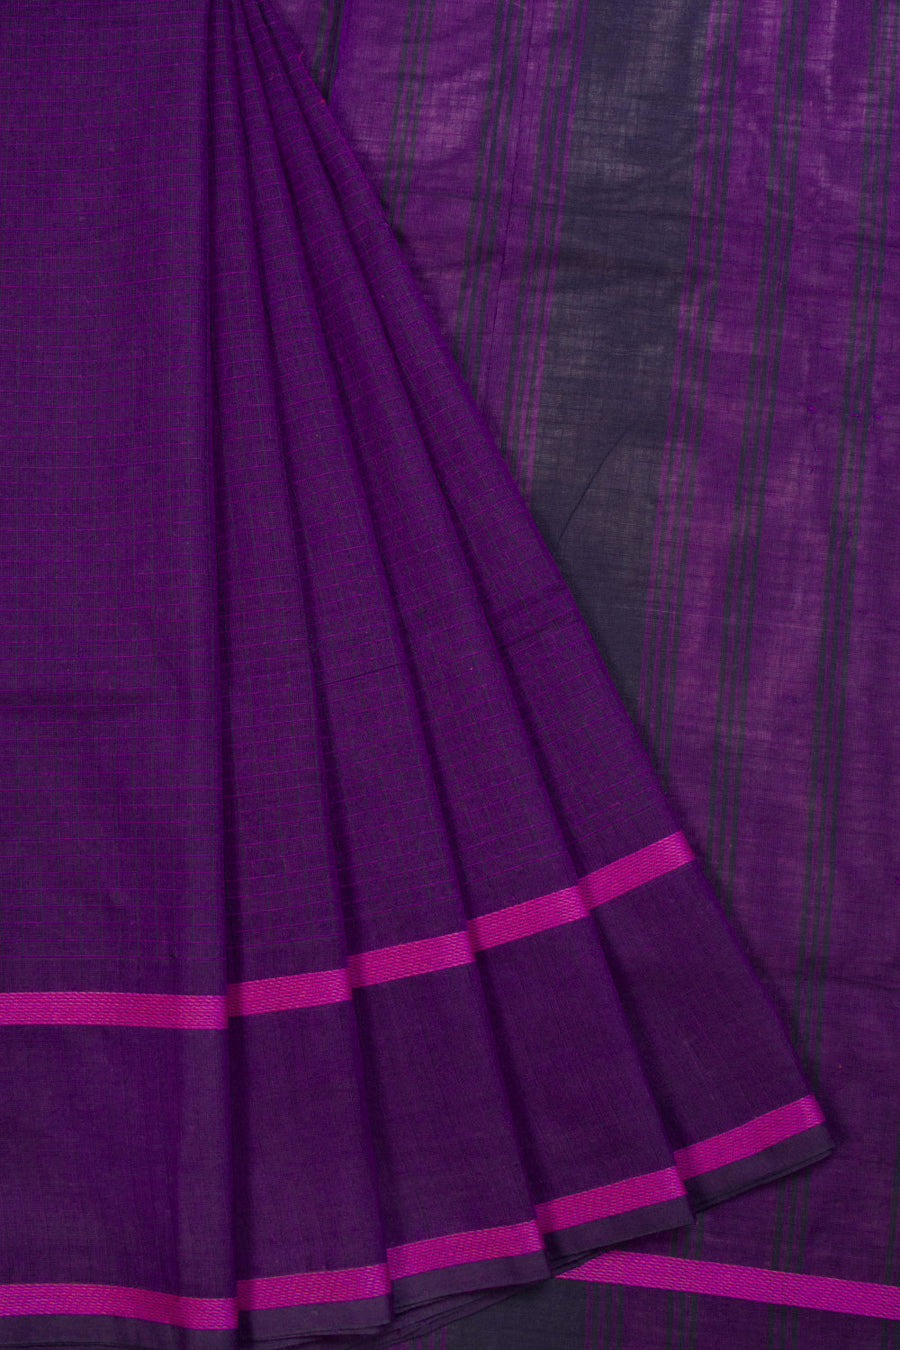 Purple Handwoven Kanchi Cotton Saree 10069310 - Avishya